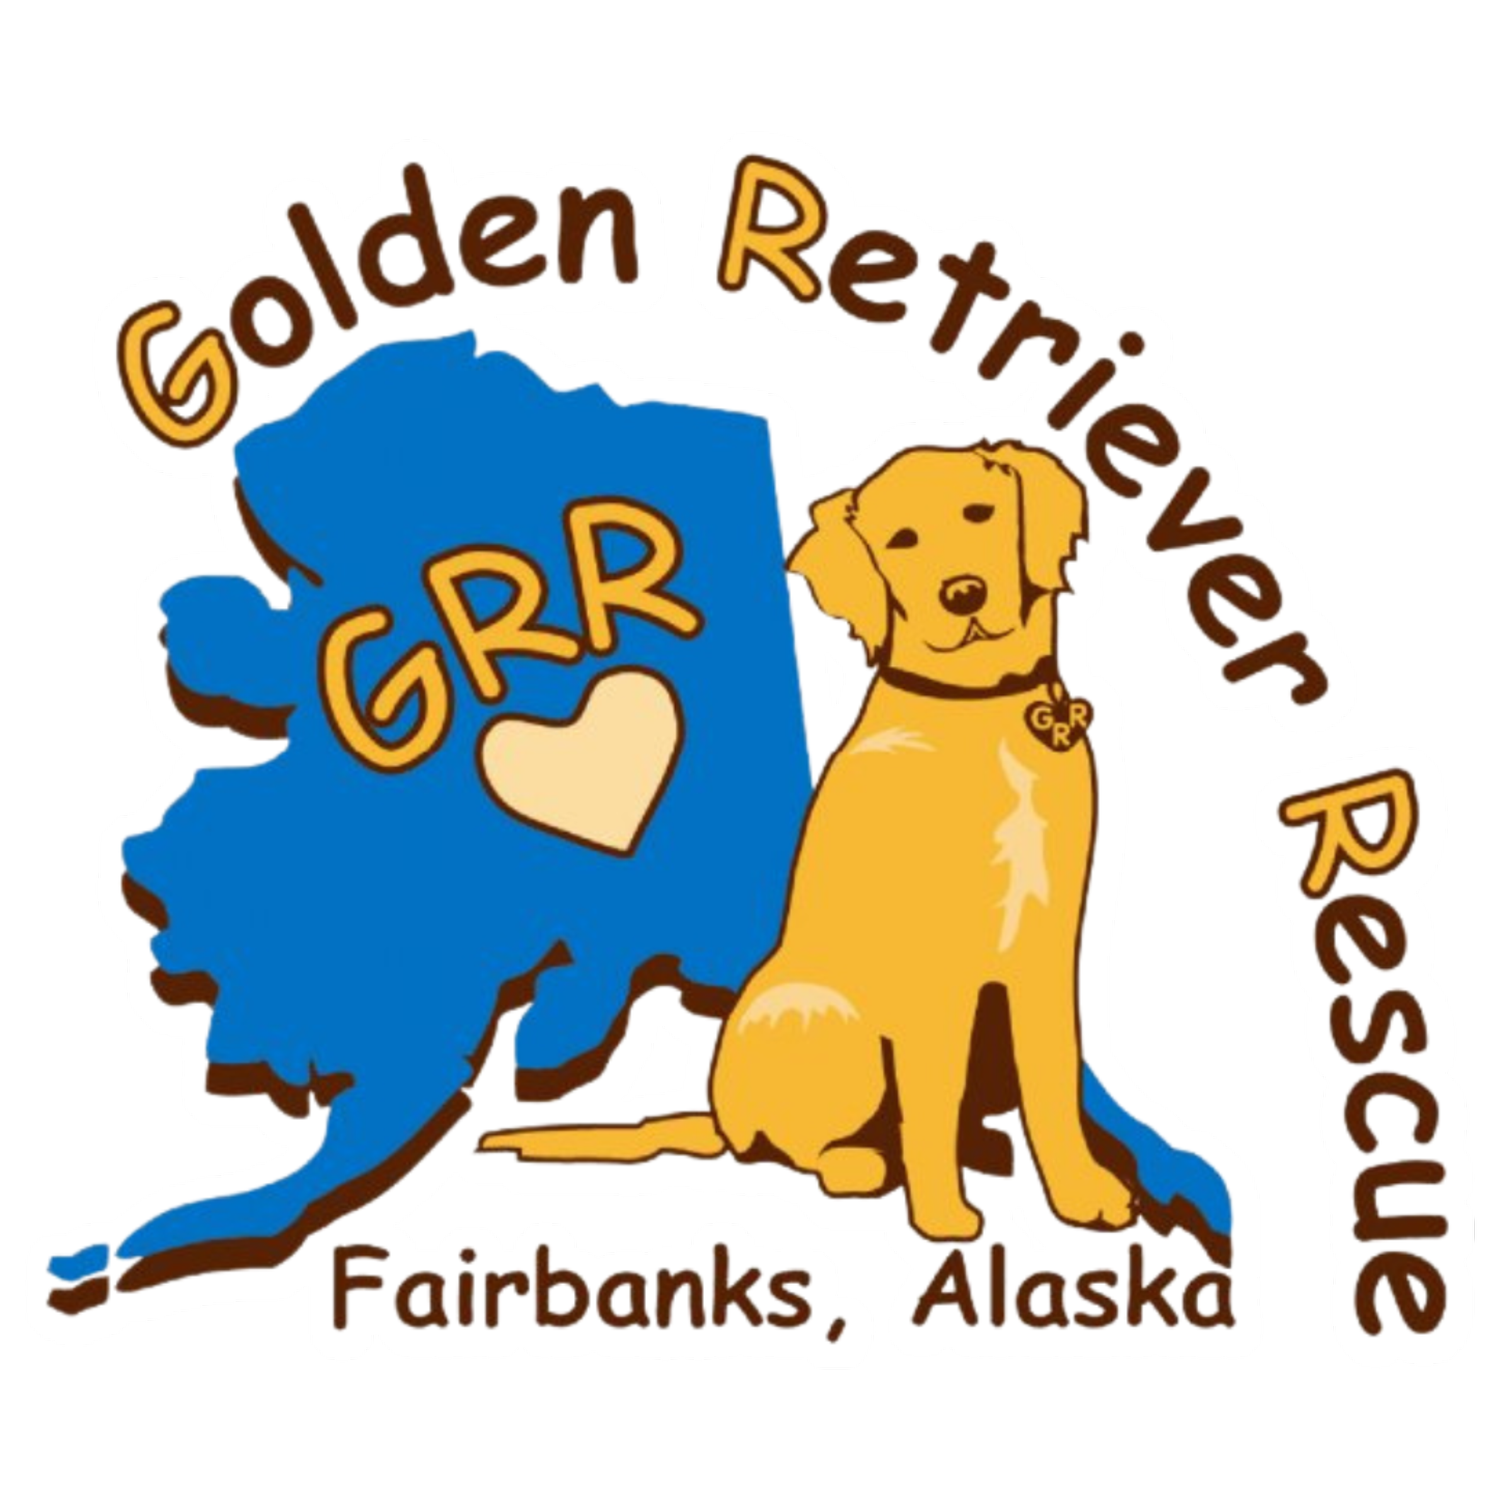 Golden Retriever Rescue of Fairbanks